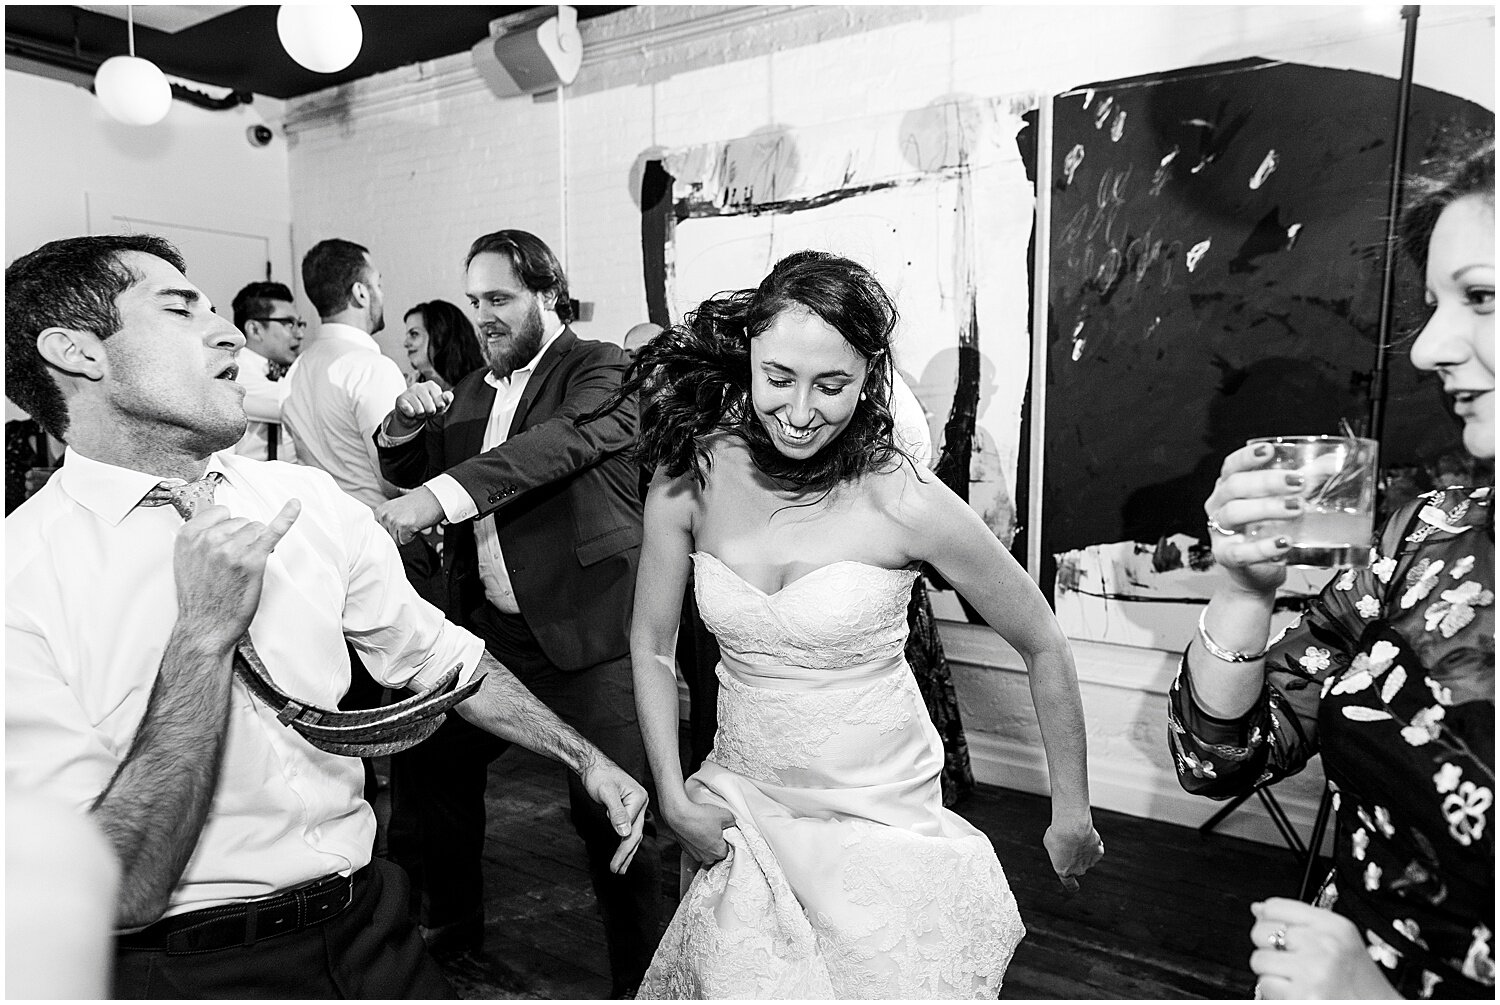 Havens-Kitchen-Wedding-Venue-NYC-Apollo-Fields-Weddings-Photographers-New-York-City-117.jpg